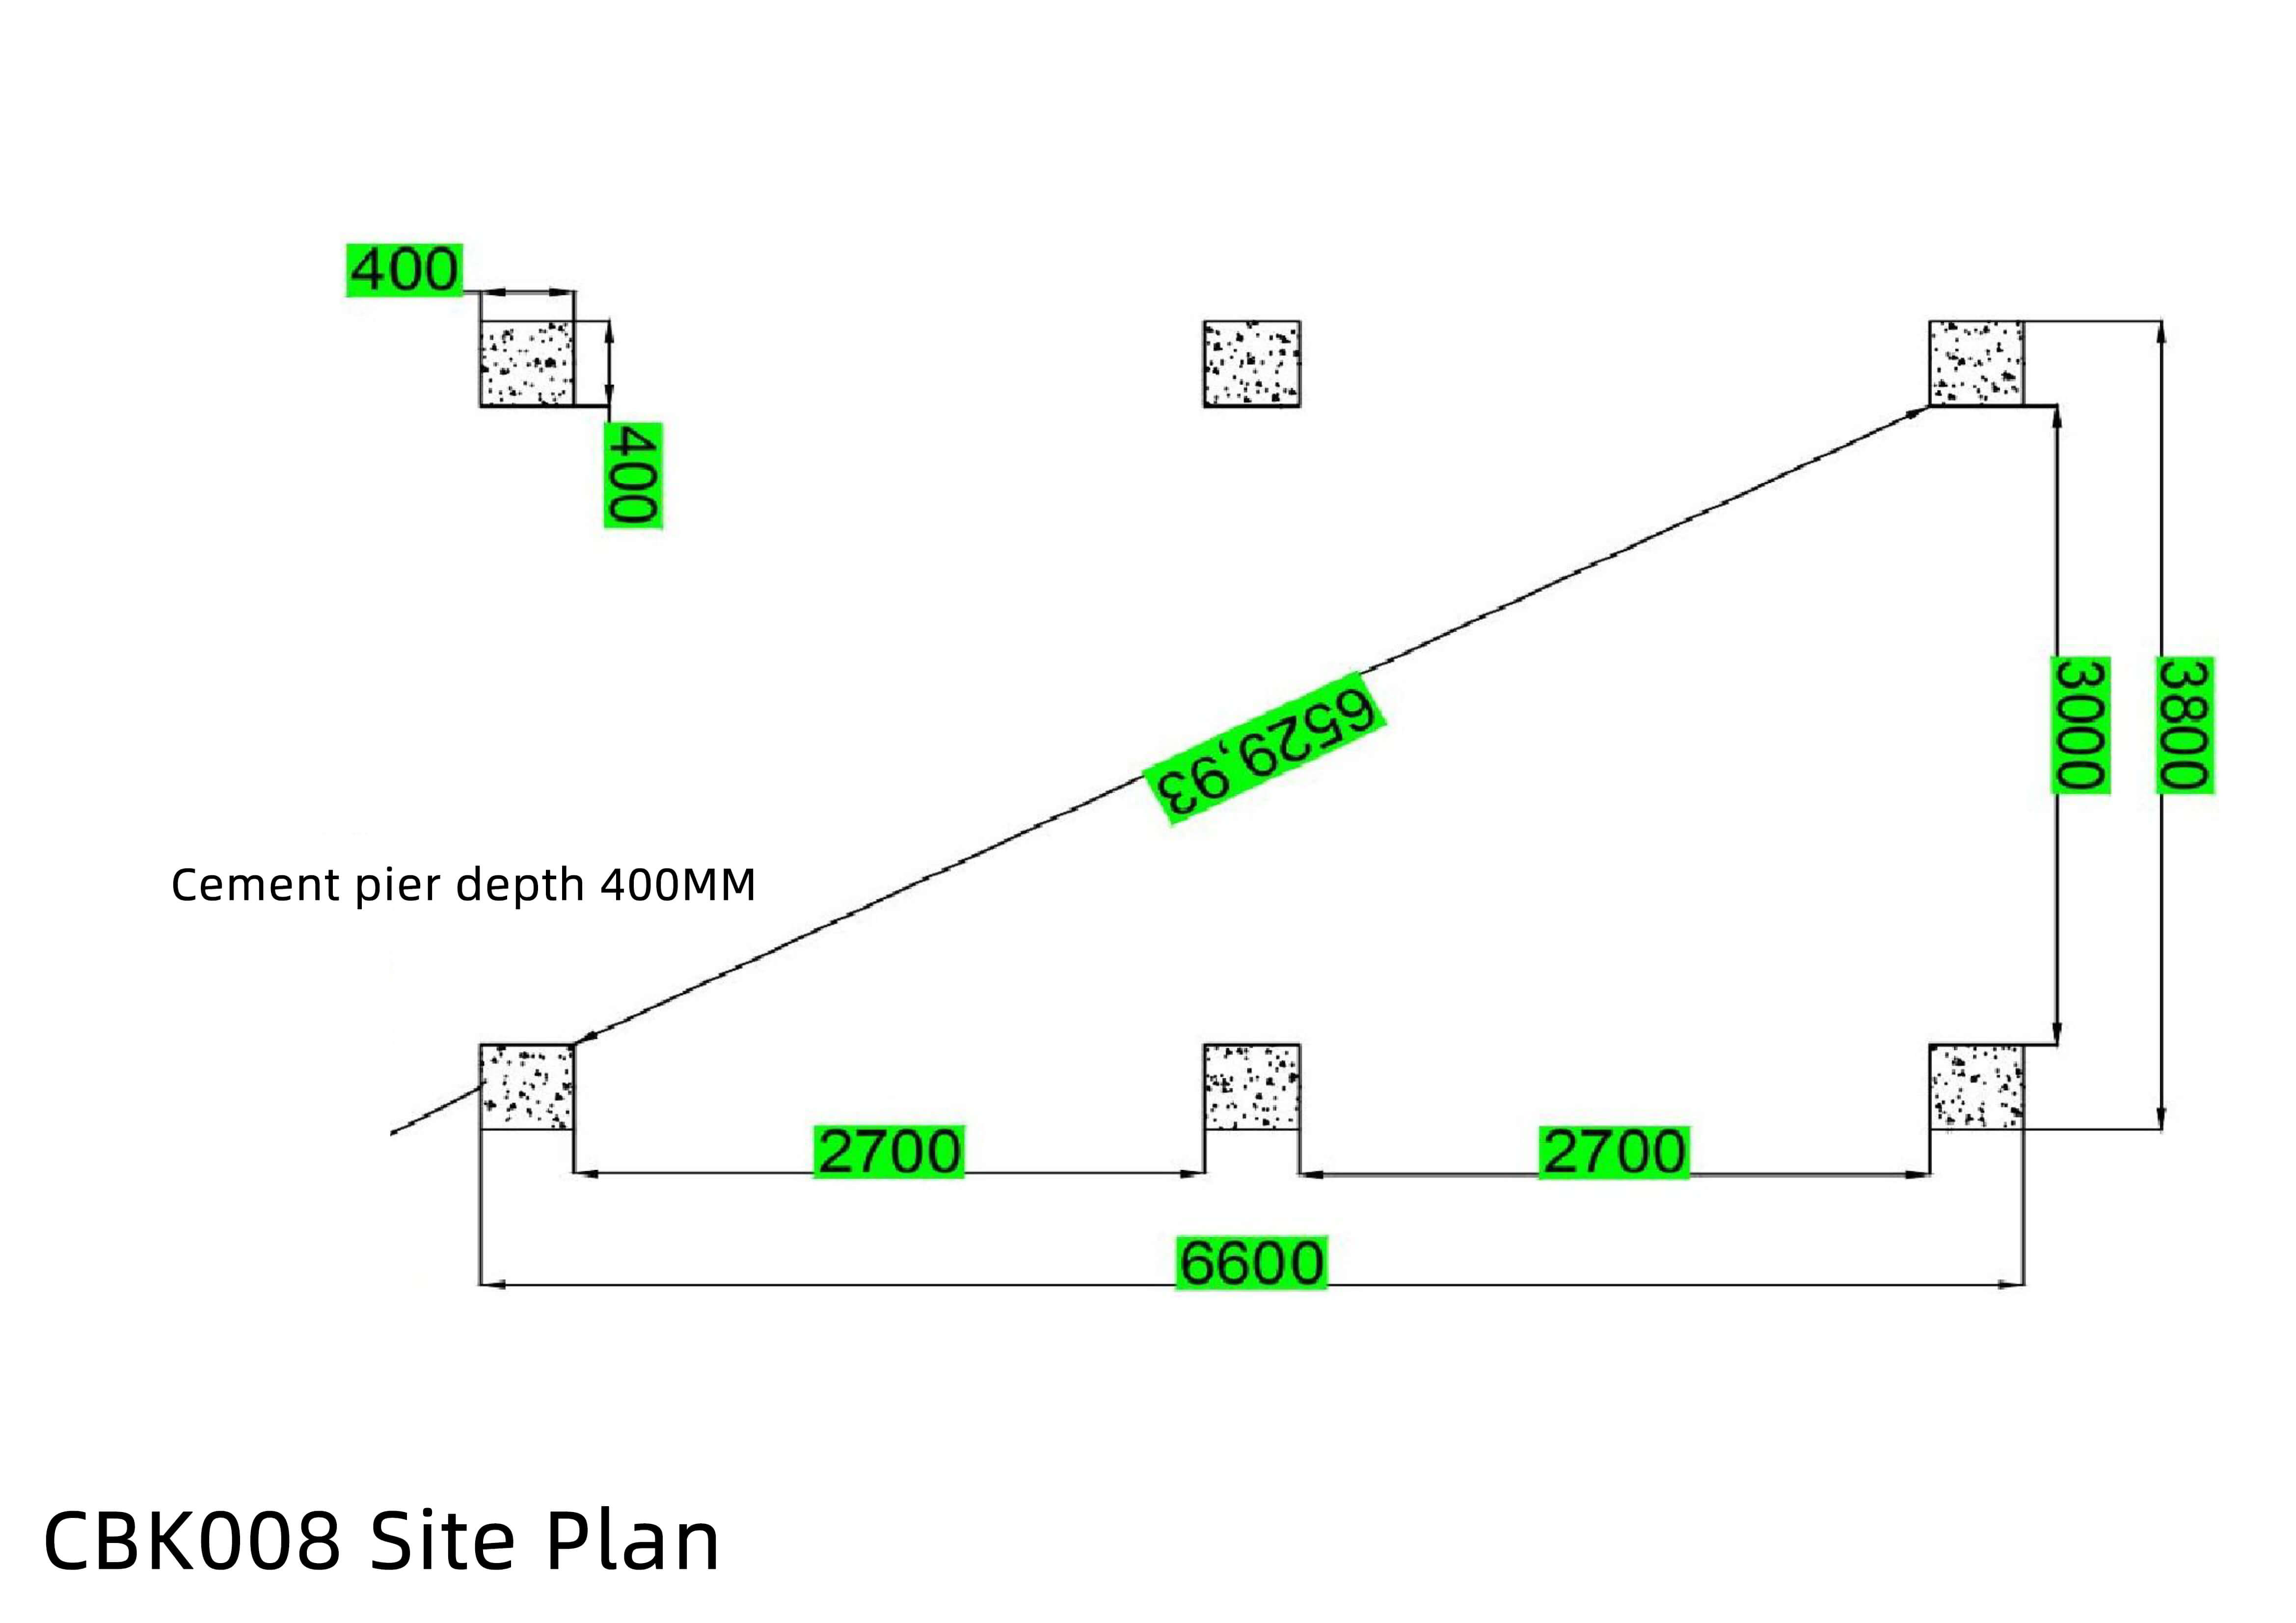 CBK 008 Site Plan